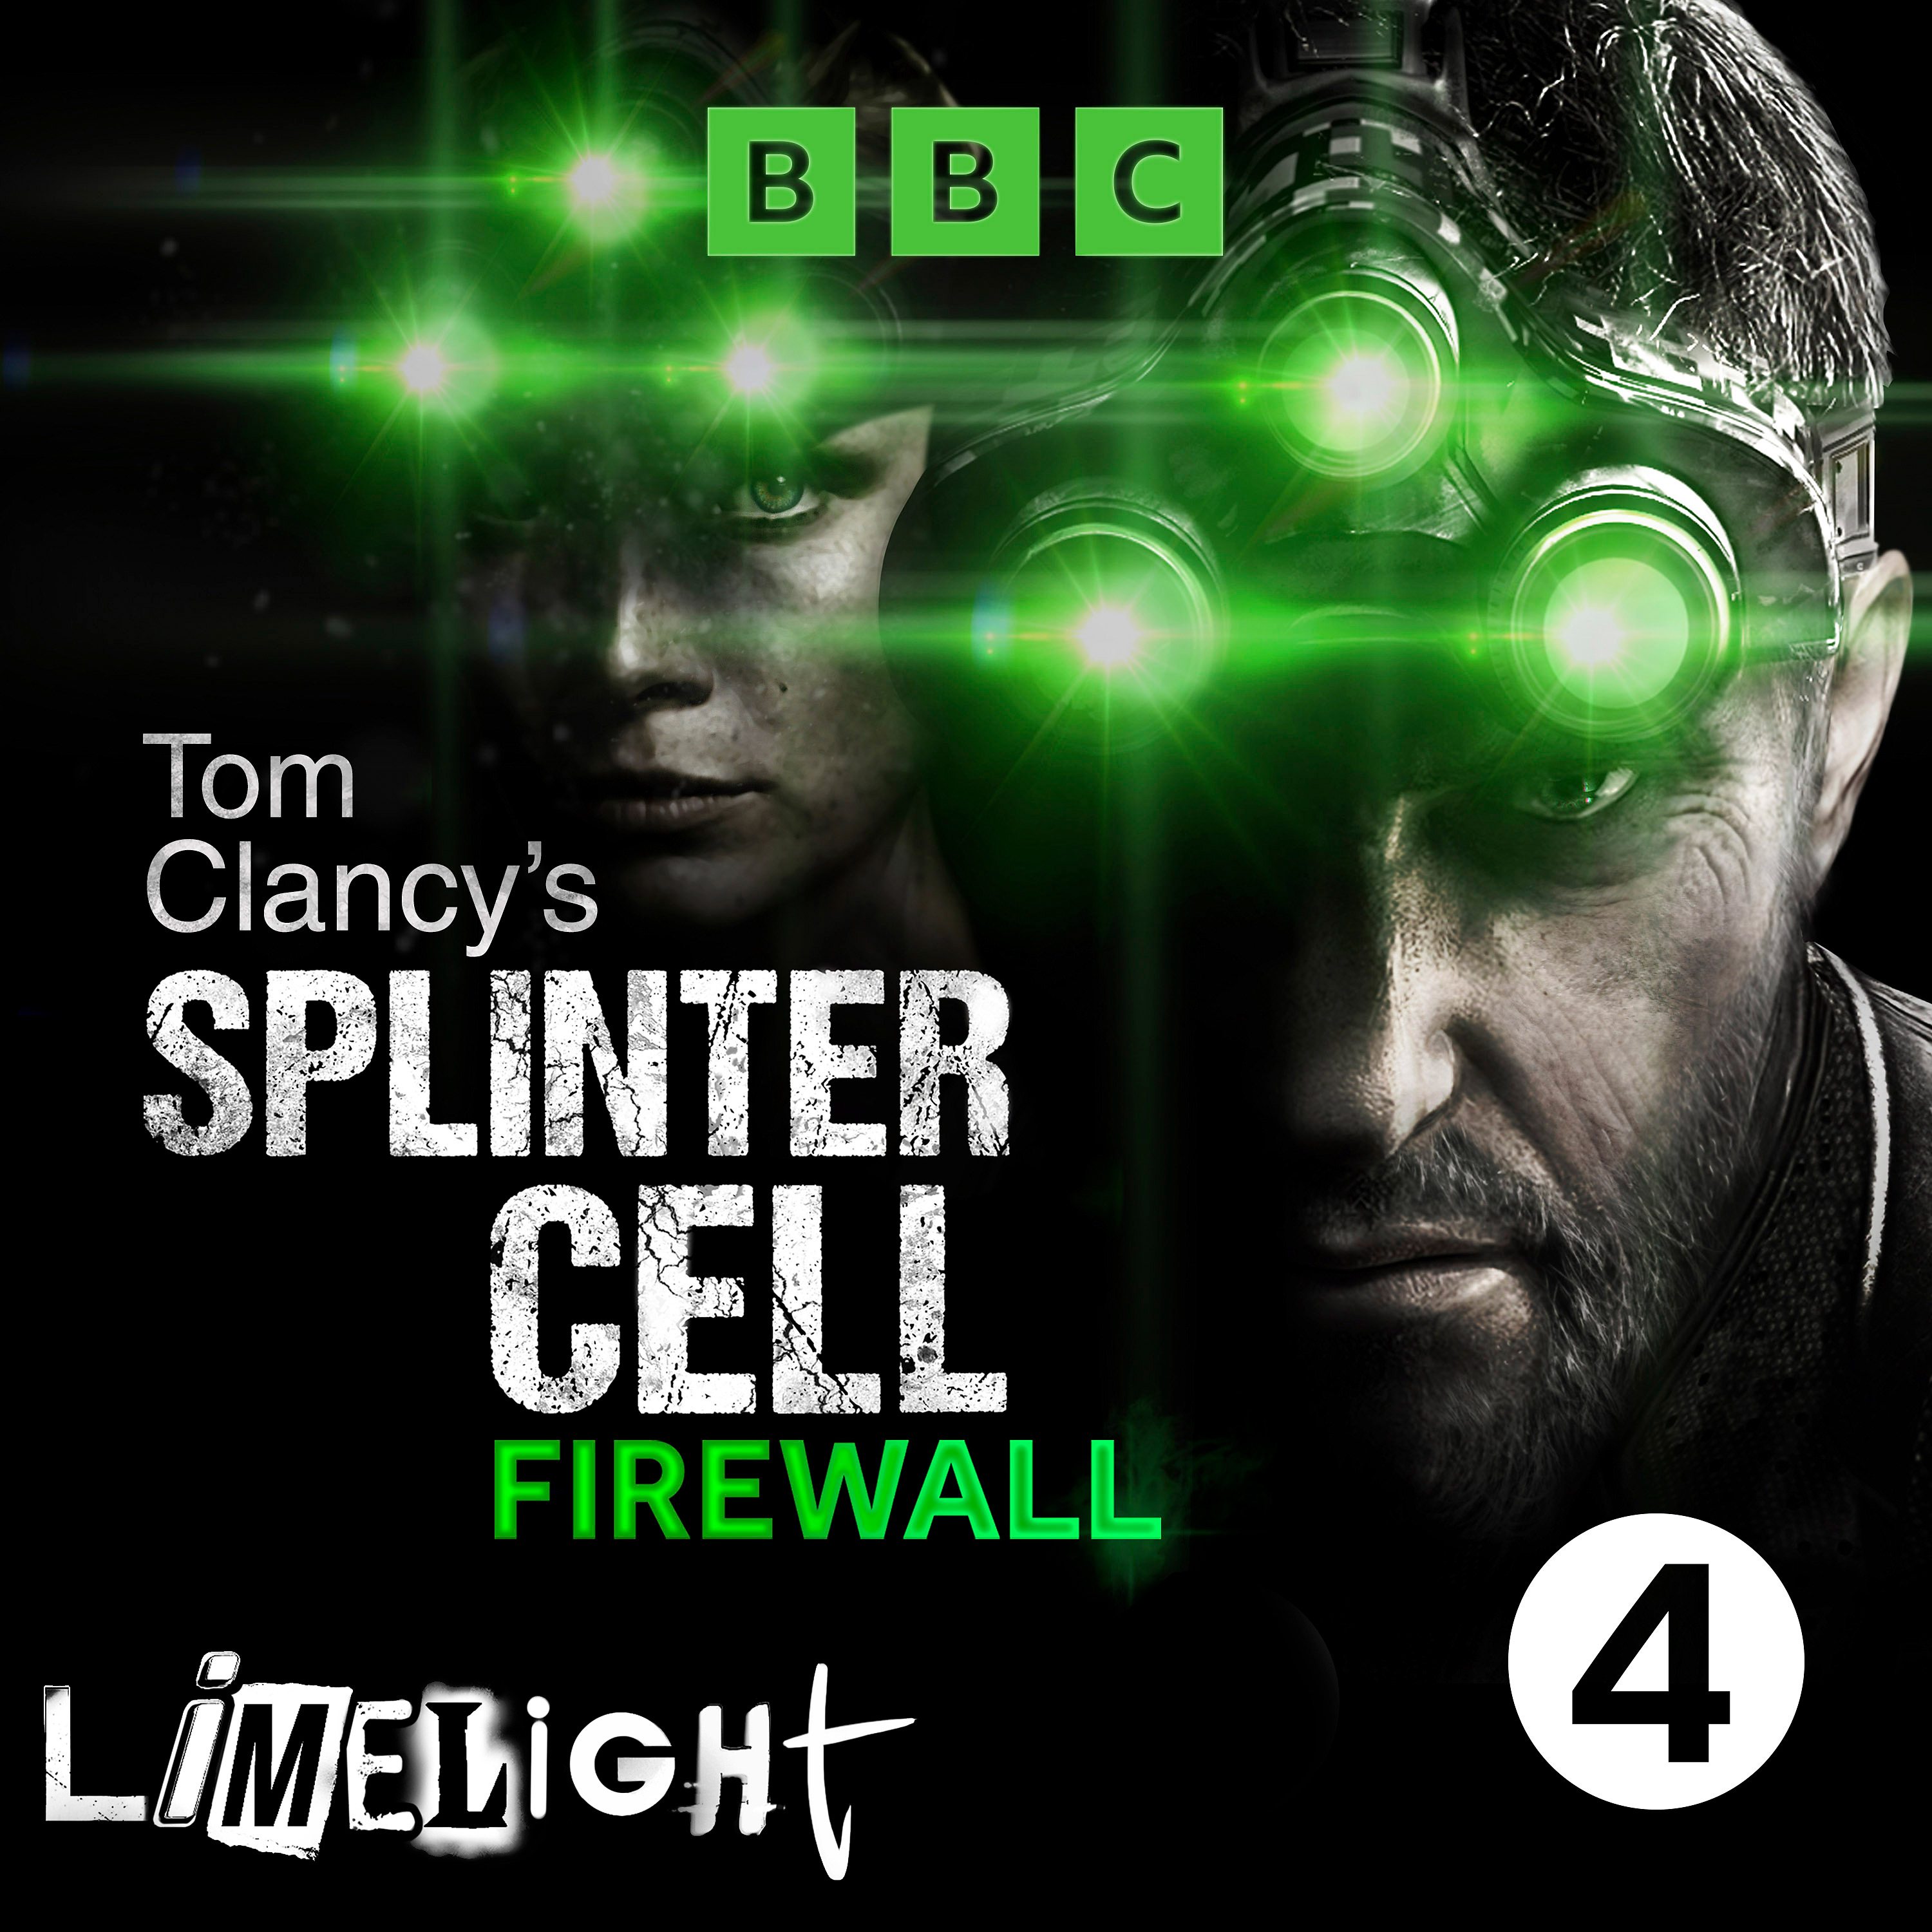 Tom Clancy’s Splinter Cell: Firewall, Episode 3